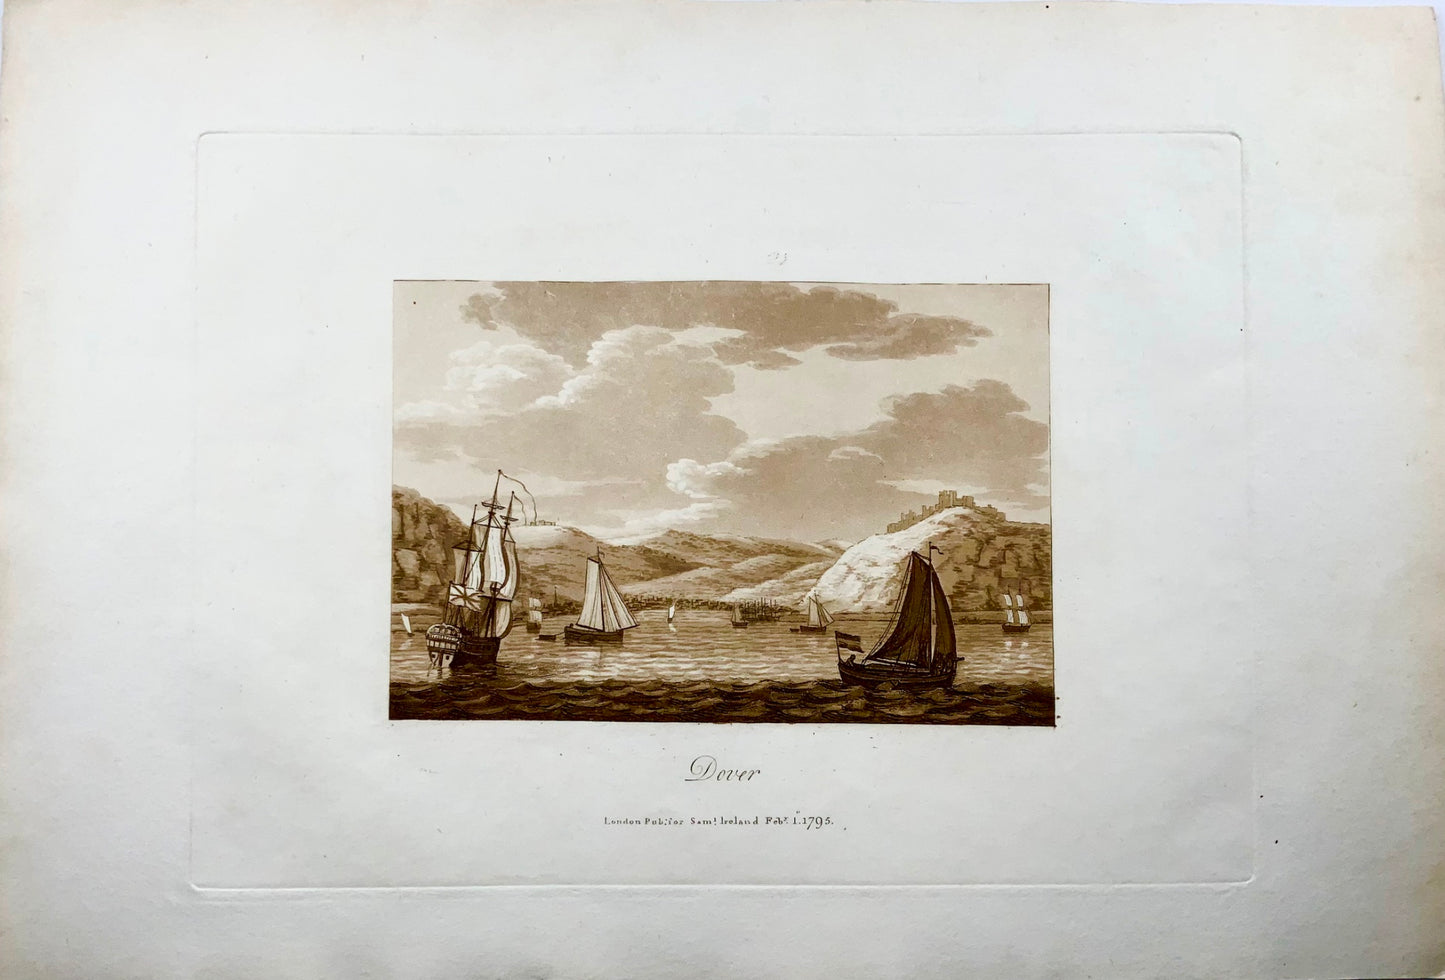 1795 Douvres depuis la mer, Angleterre, aquatinte sépia par Sam. Irlande, grand papier